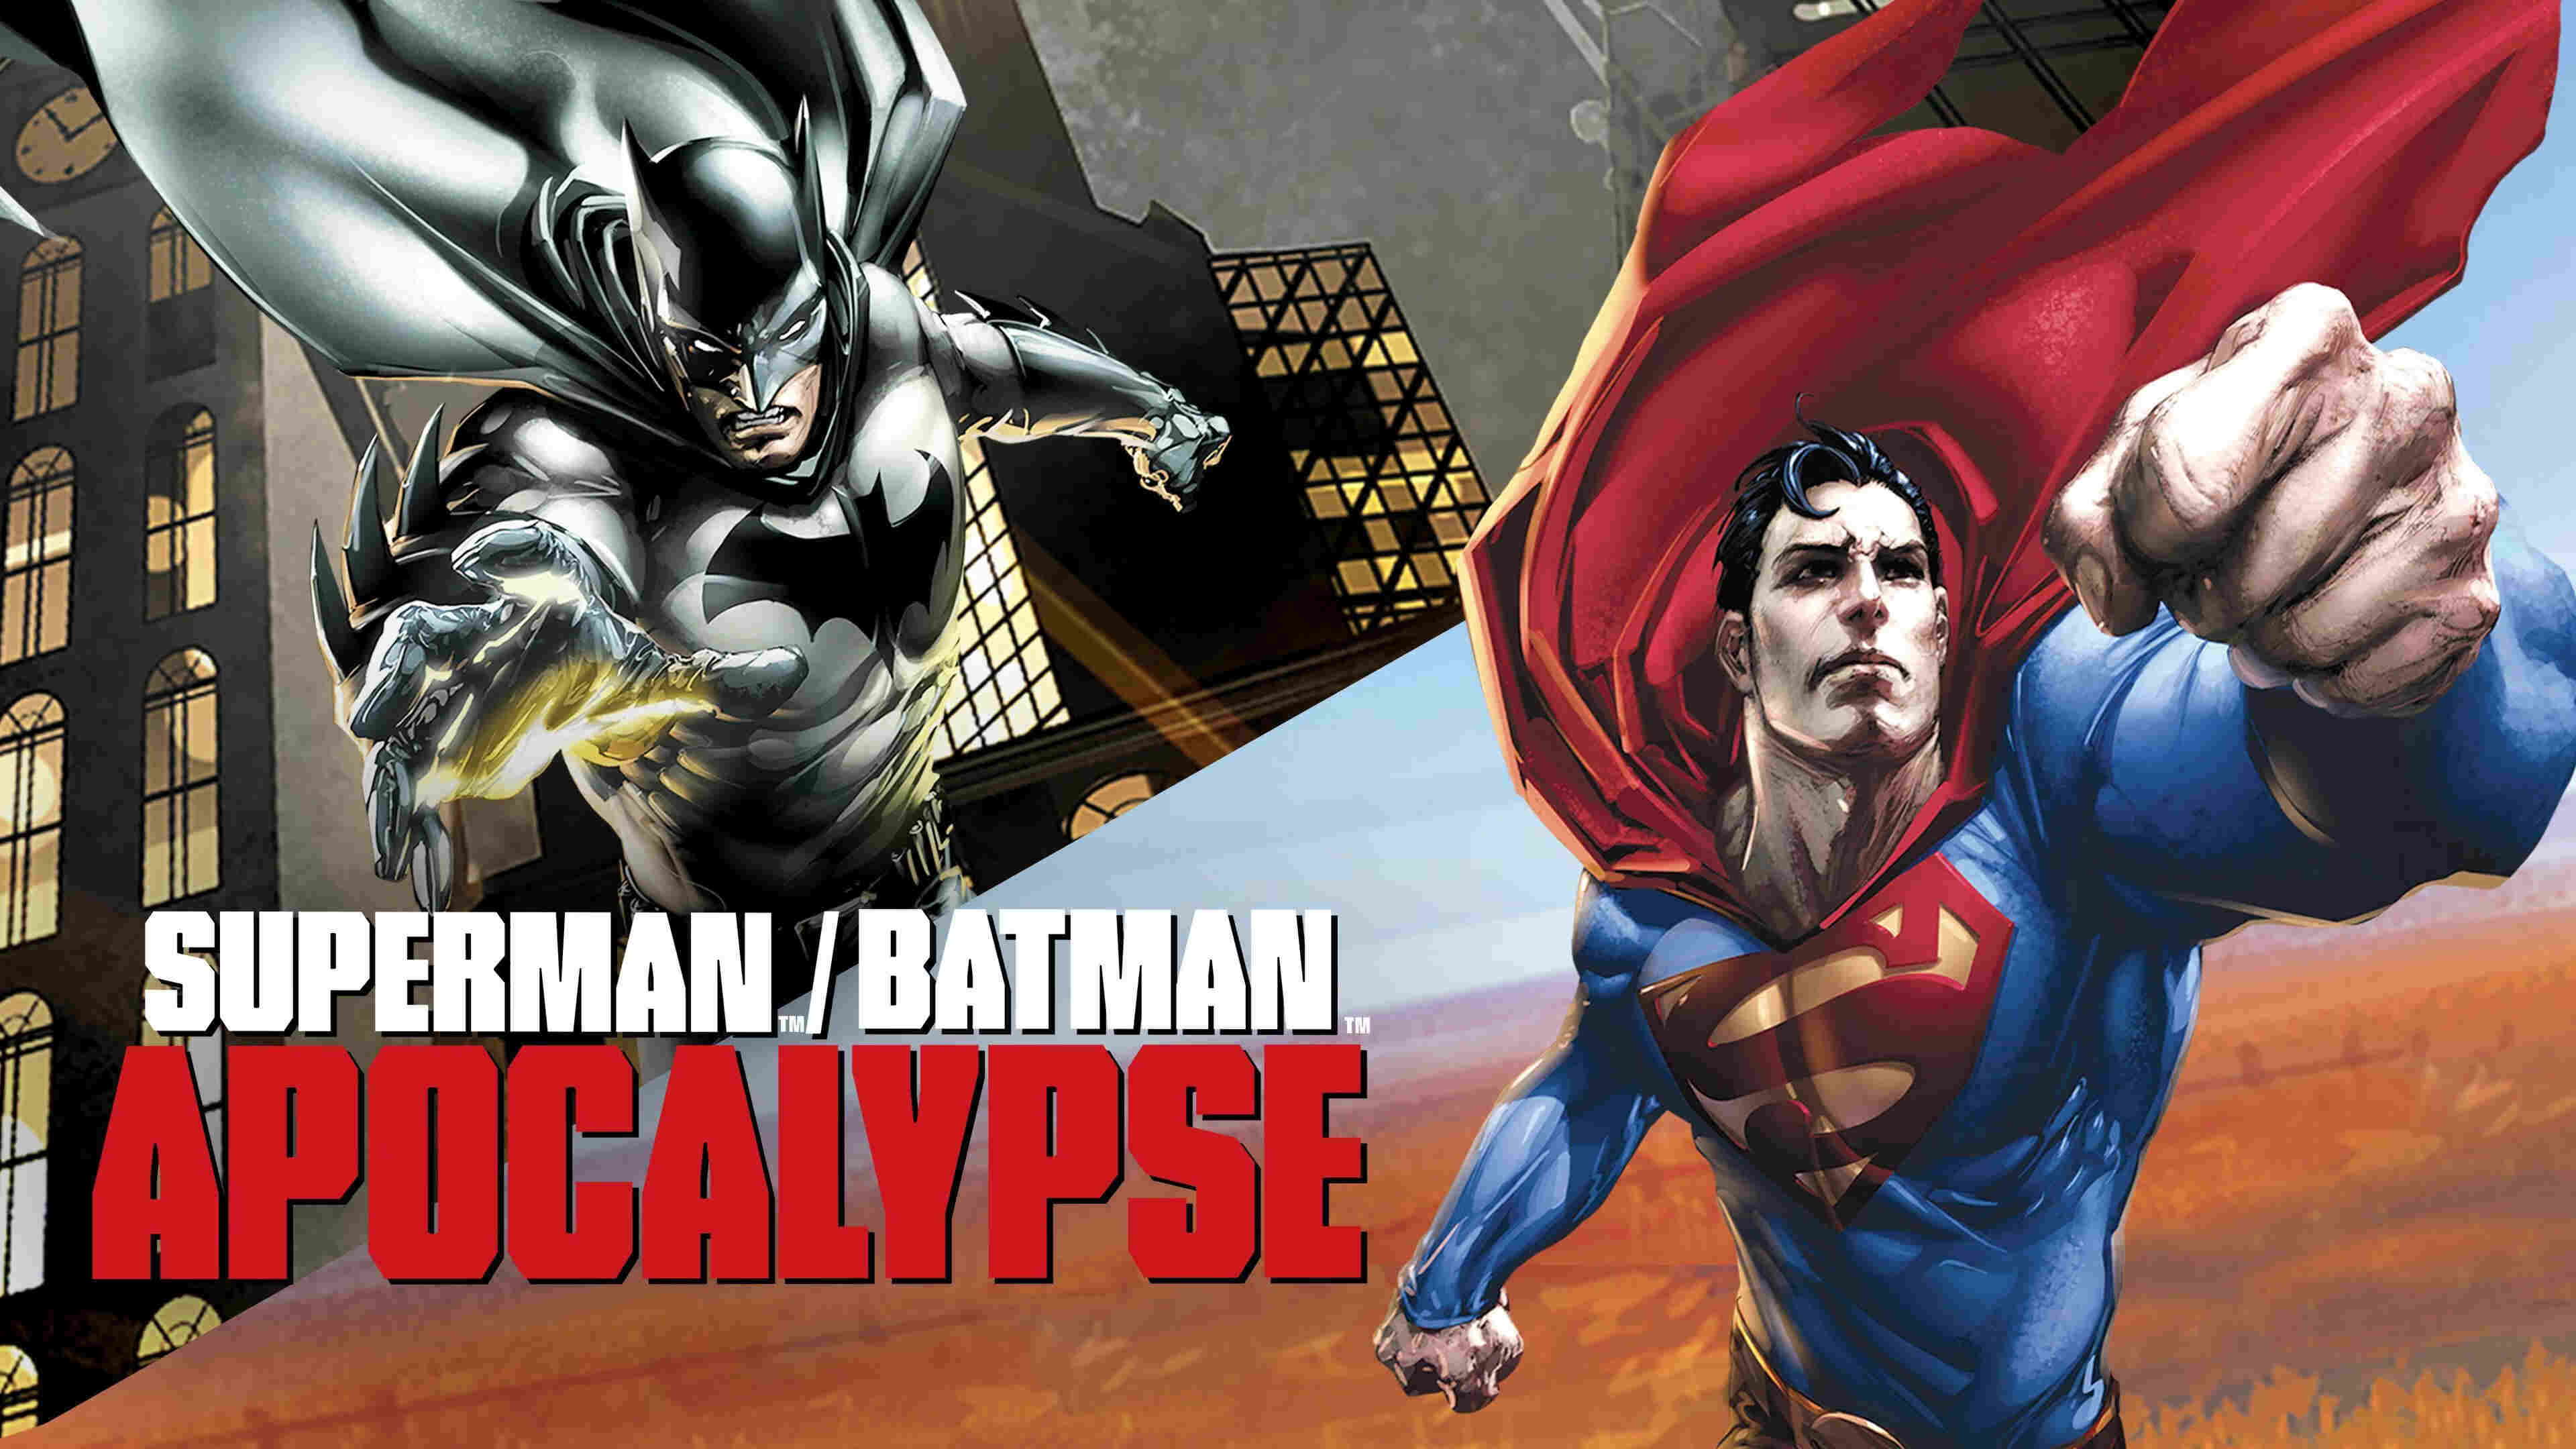 33-facts-about-the-movie-superman-batman-apocalypse